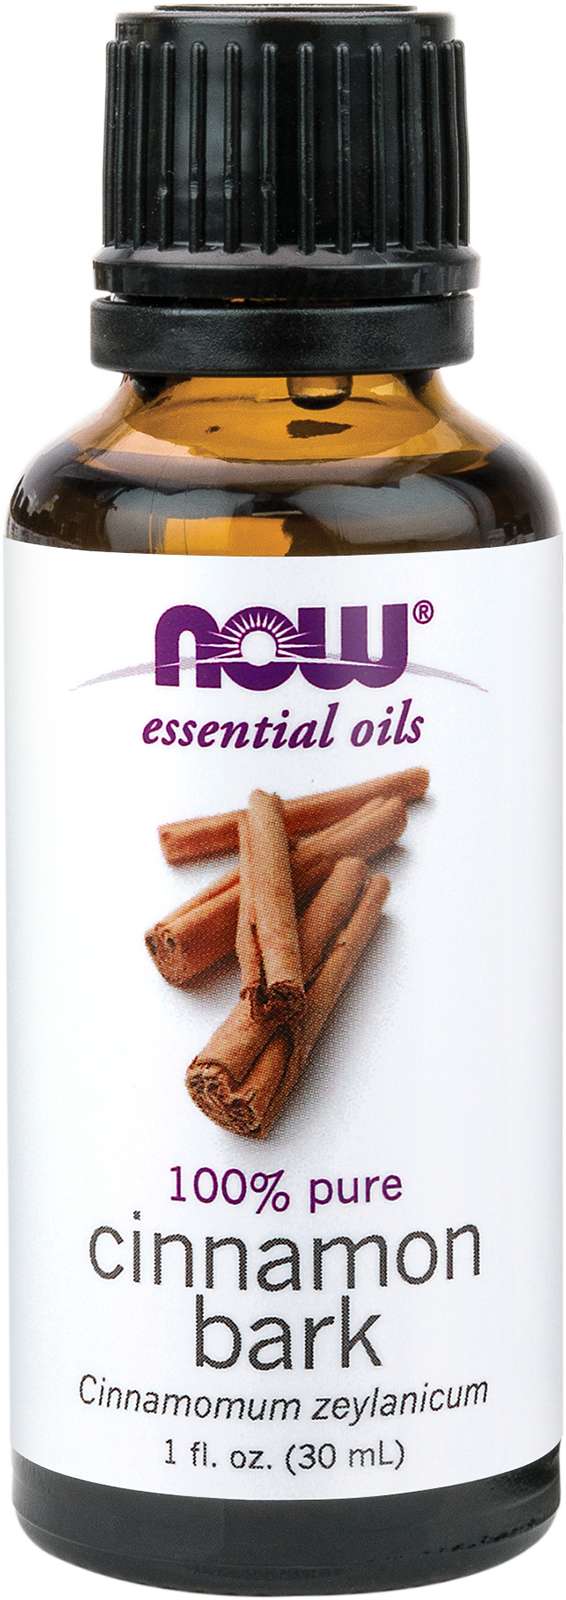 Cinnamon Bark Essential Oil 30ml - Lighten Up Shop